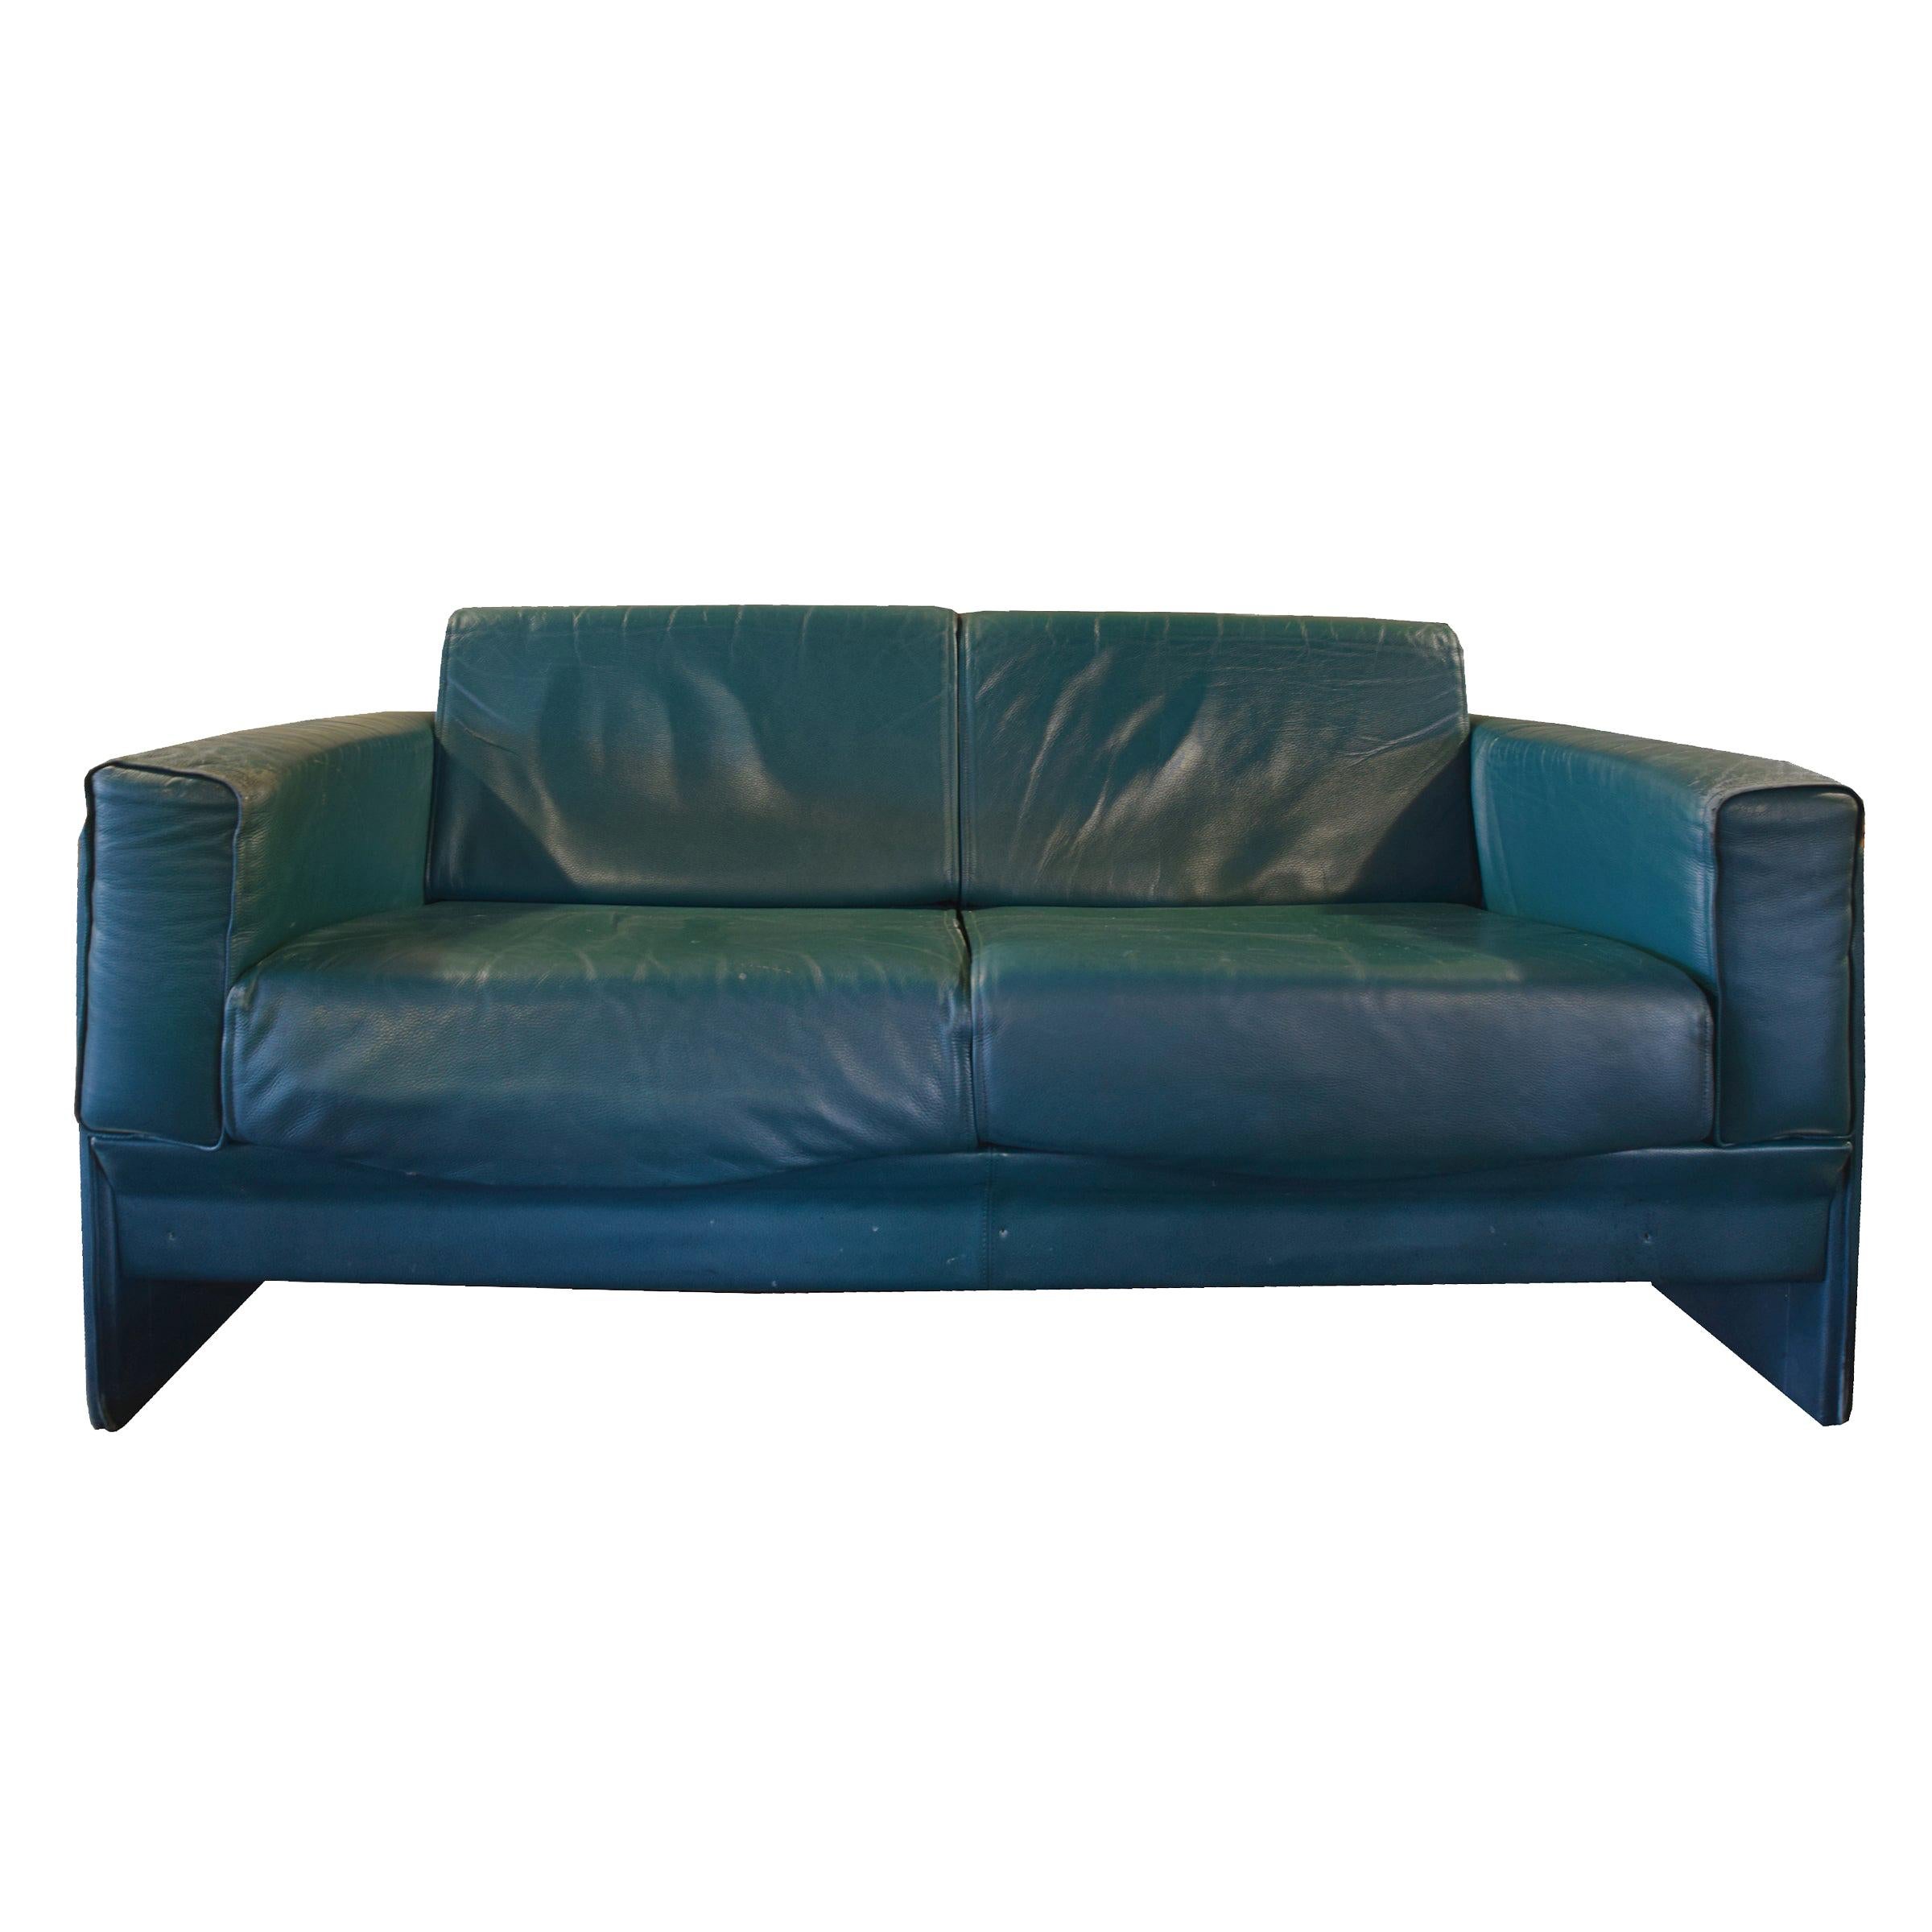 Italian Midcentury Leather Sofa